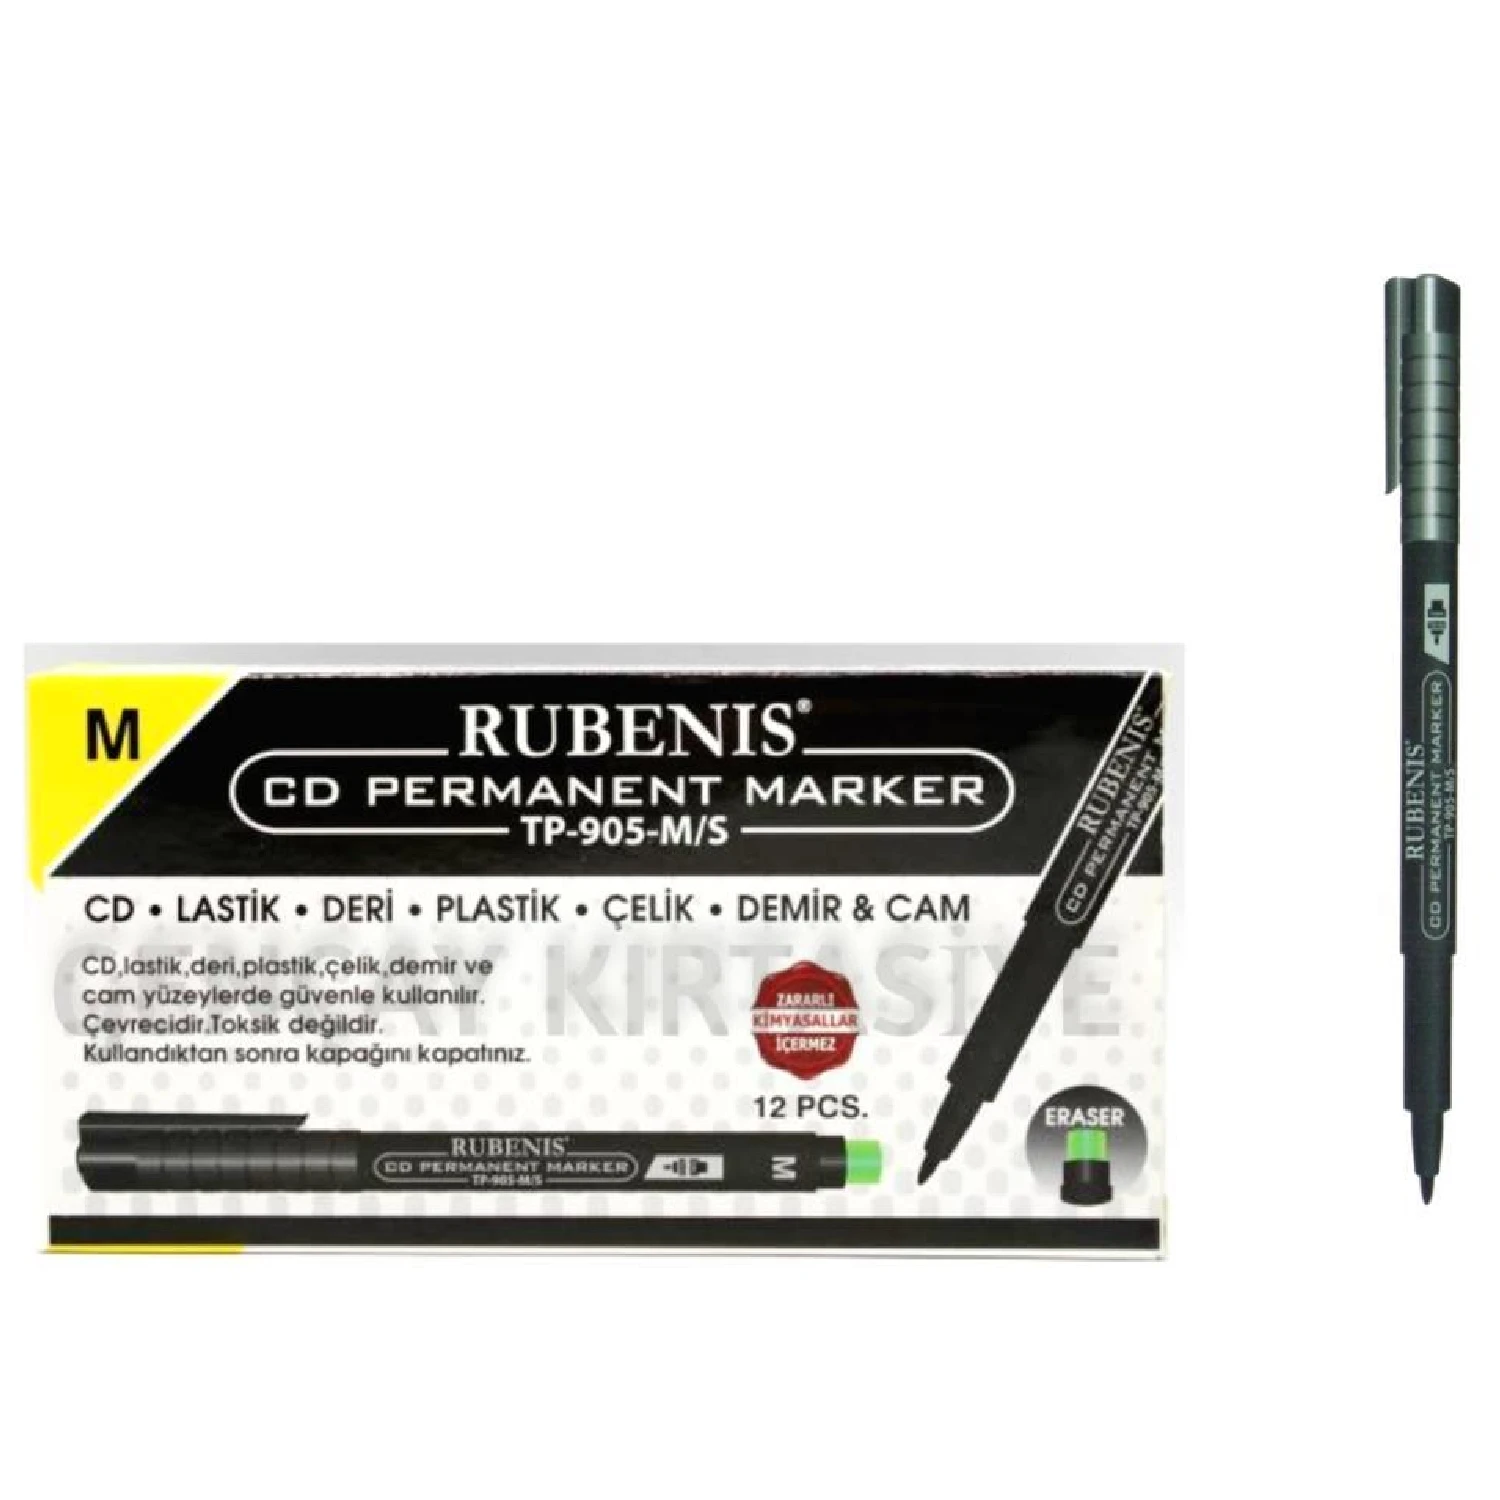 Rubenis CD סמנים קבע-סיבוב החוד S&M-עט לכתיבה על זכוכית, פלסטיק, אלומיניום וחלק משטחים - ייבוש מהיר, כתם